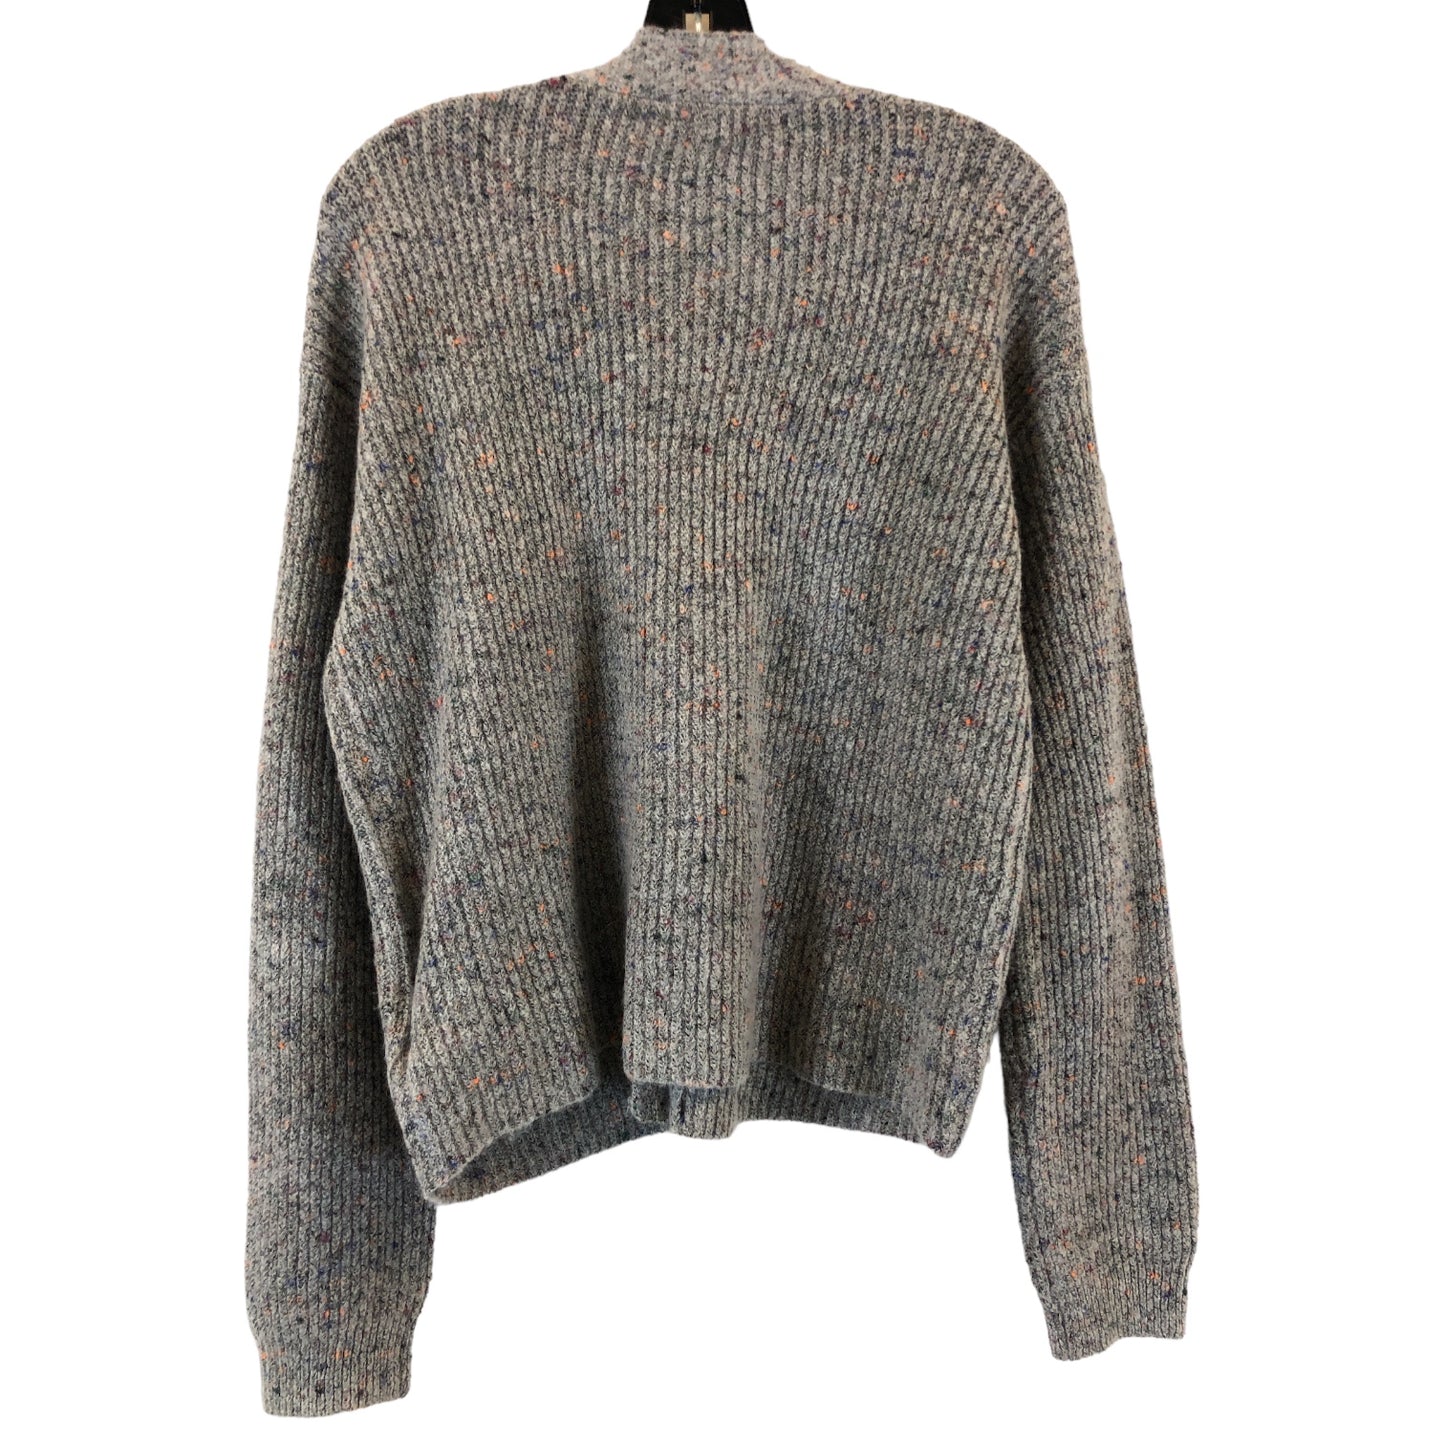 Sweater Cardigan By Bb Dakota  Size: L